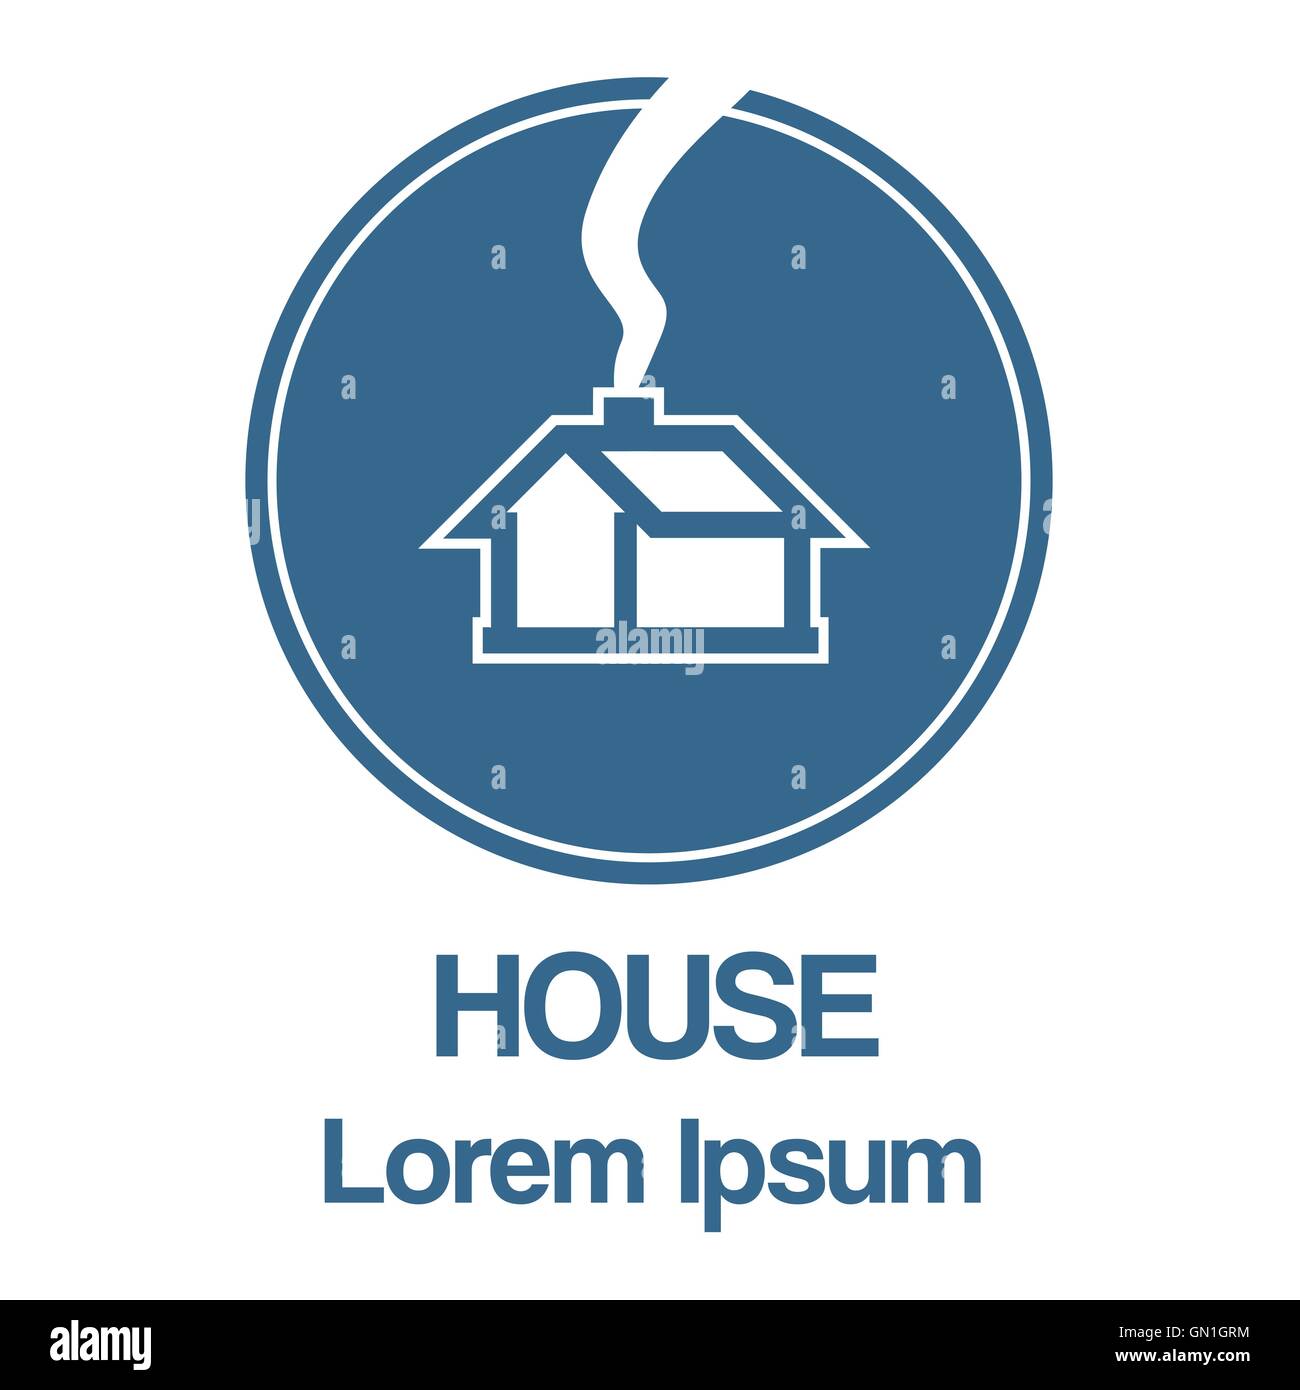 House in blue circle logo creative template Stock Vector